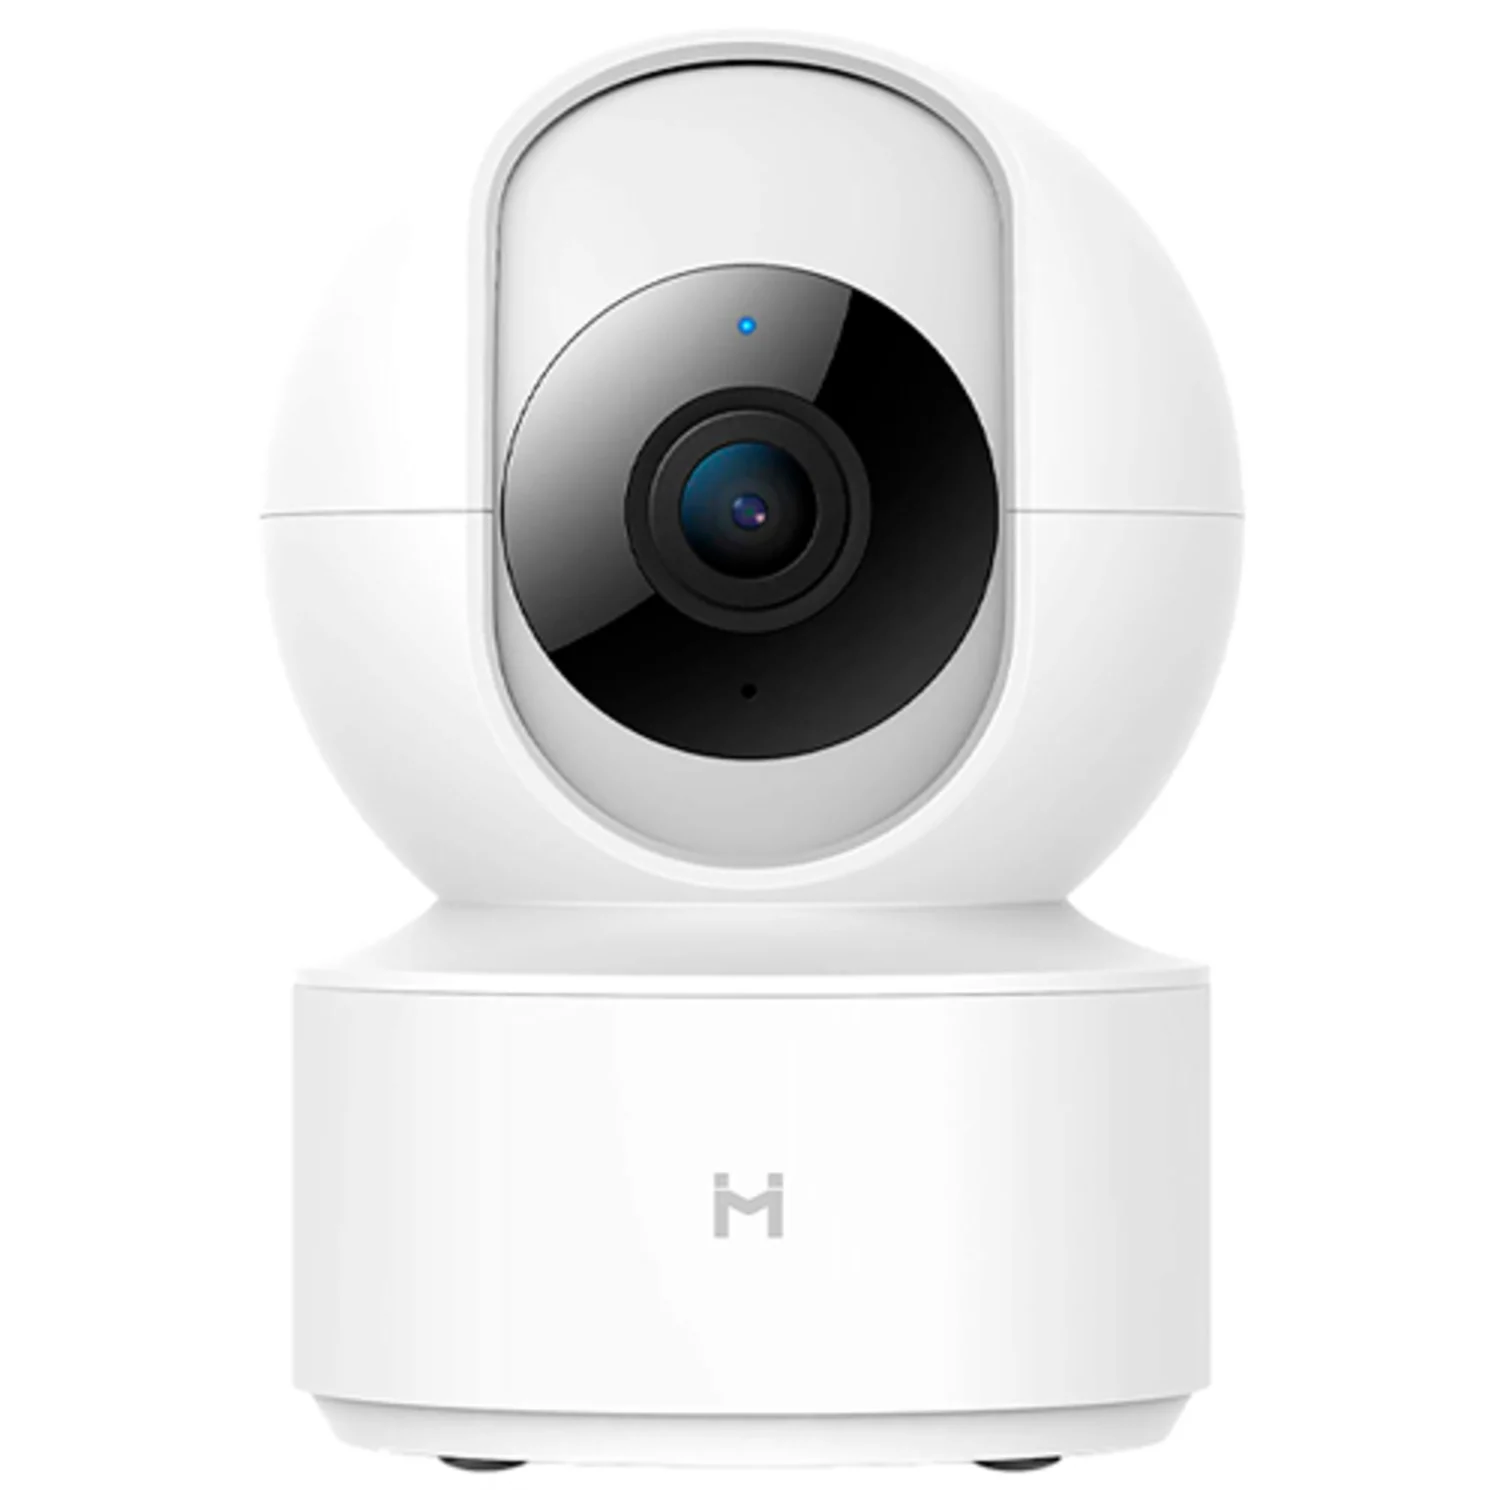 Câmera Xiaomi Lmilab Mi Home Security - Branco (CMSXJ16A)